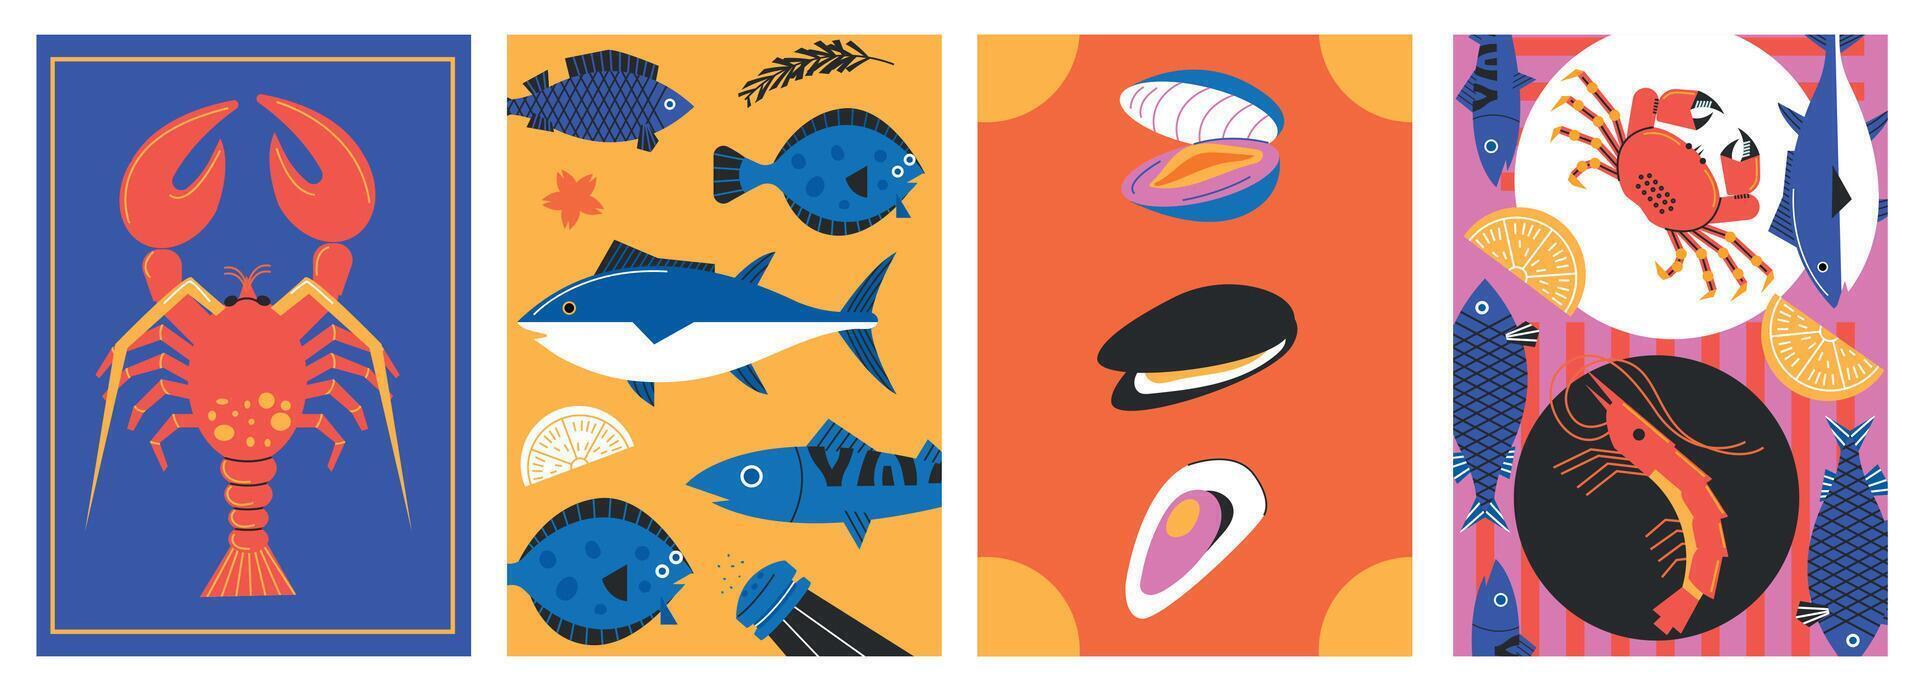 Mariscos minimalista póster. resumen dibujos animados pescado mariscos elementos para restaurante menú antecedentes diseño, de moda sencillo pancartas vector colección